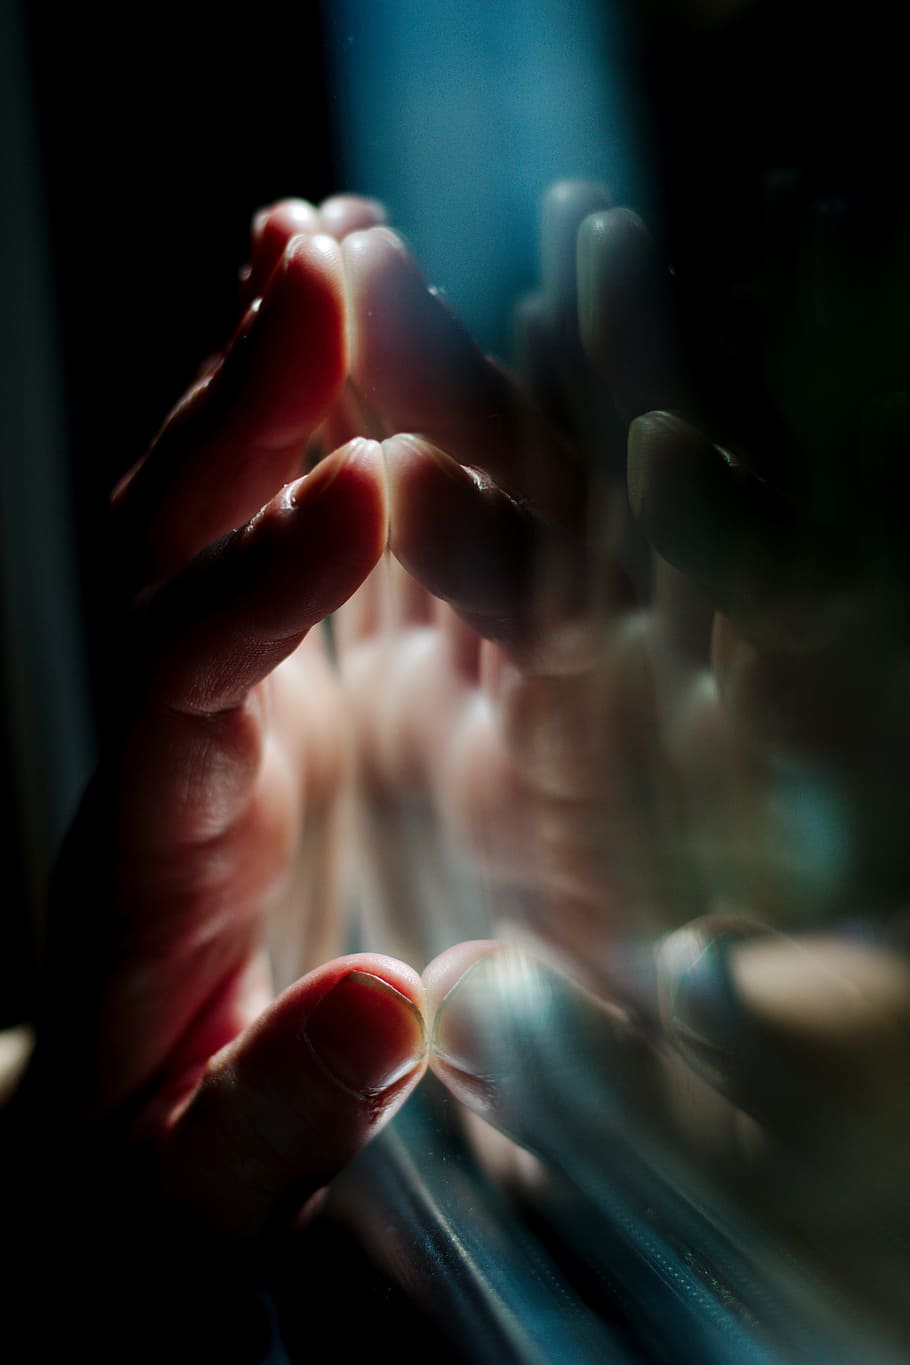 hand, palm, blur, night, light, window, glass, reflection, human hand, human body part